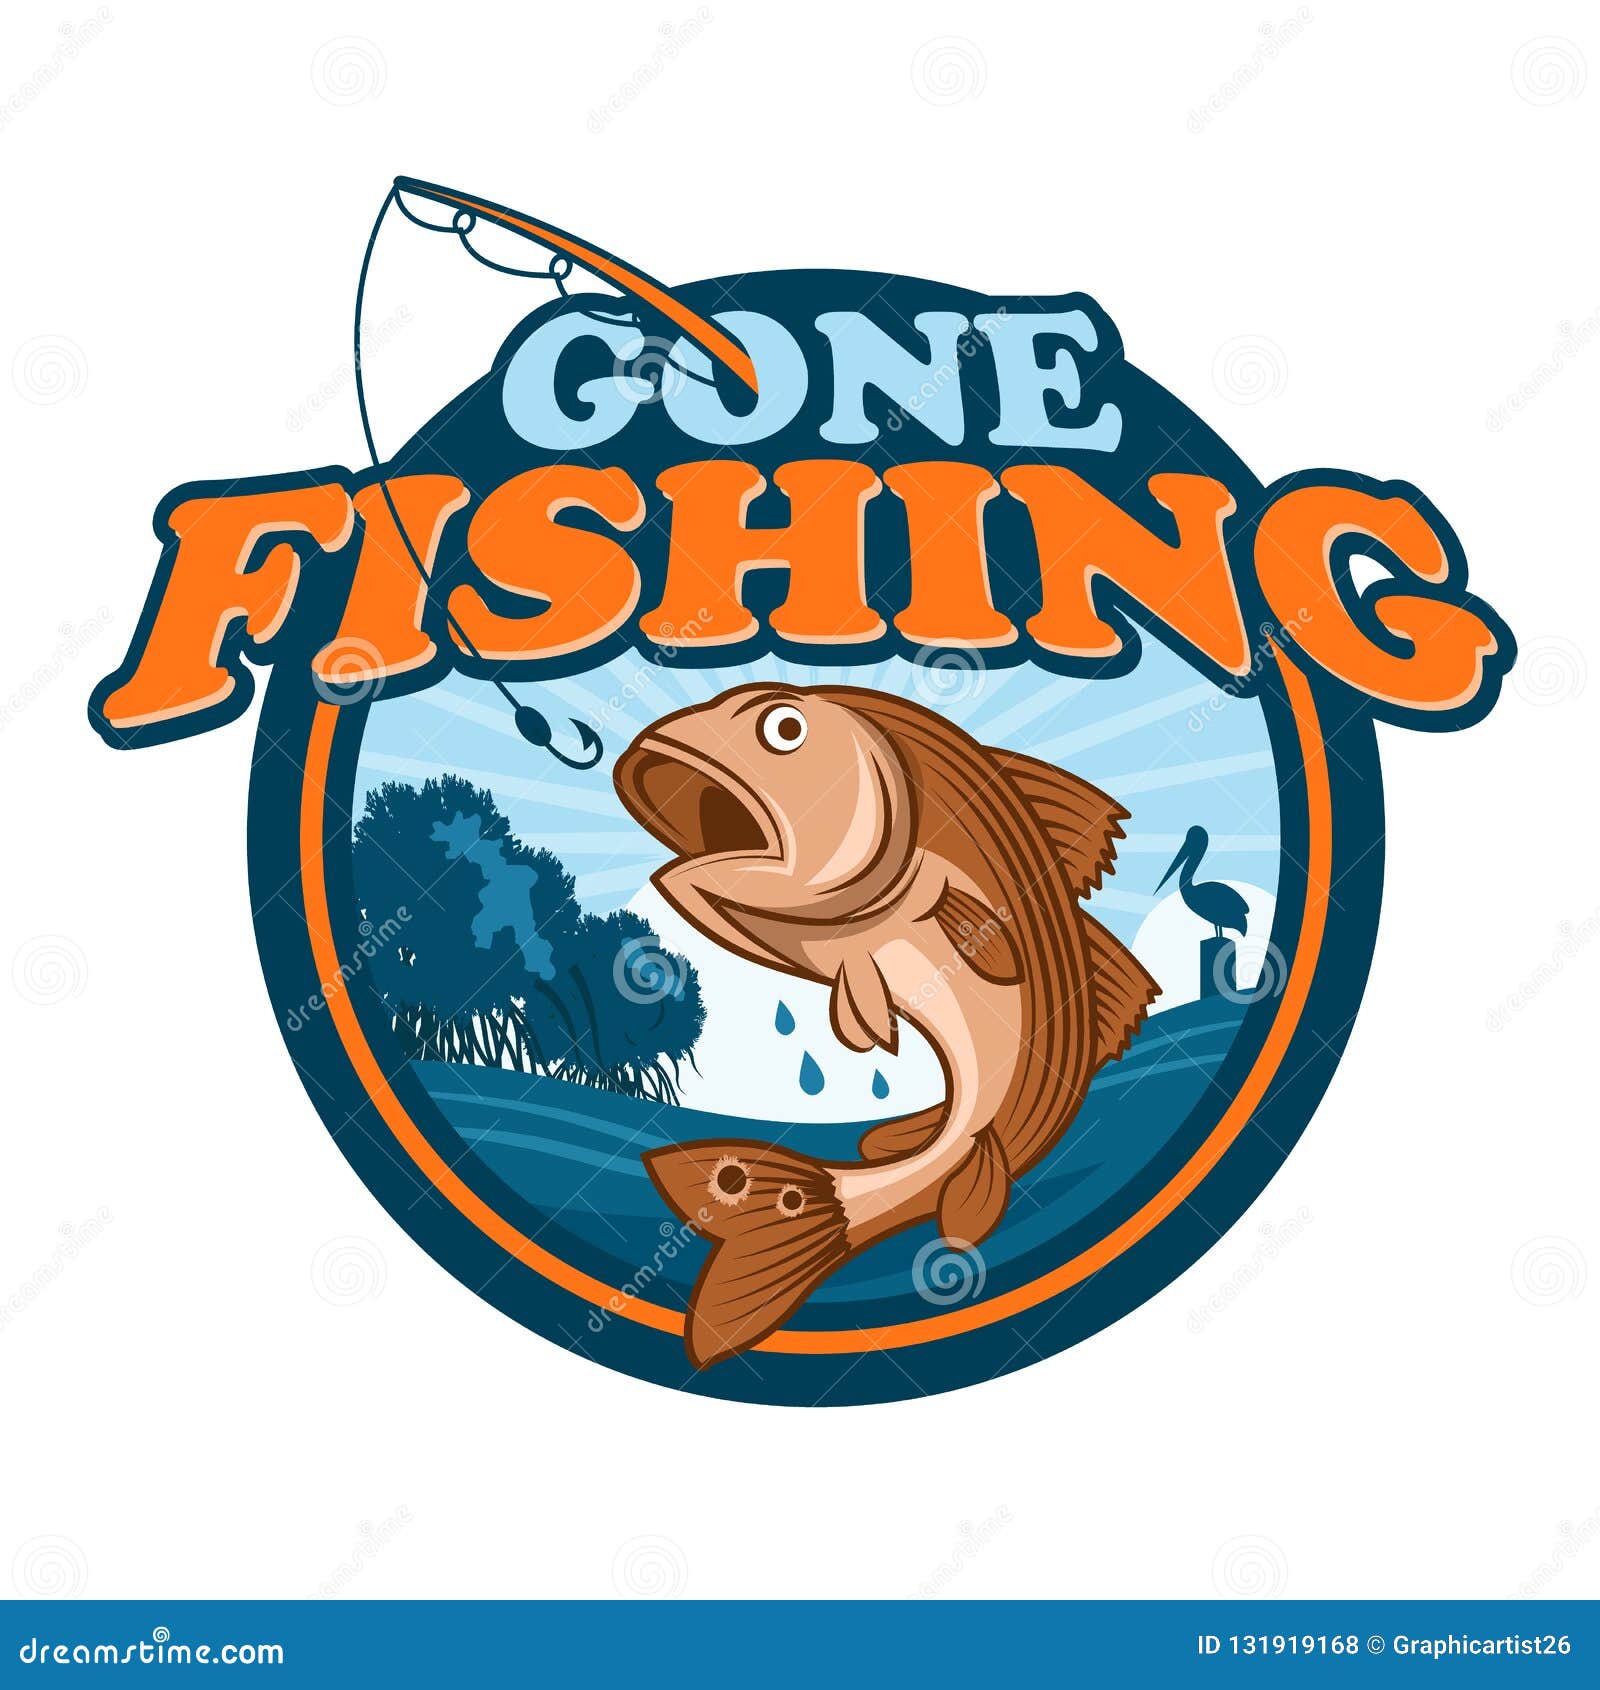 Gone Fishing Badge stock vector. Illustration of insignia - 131919168